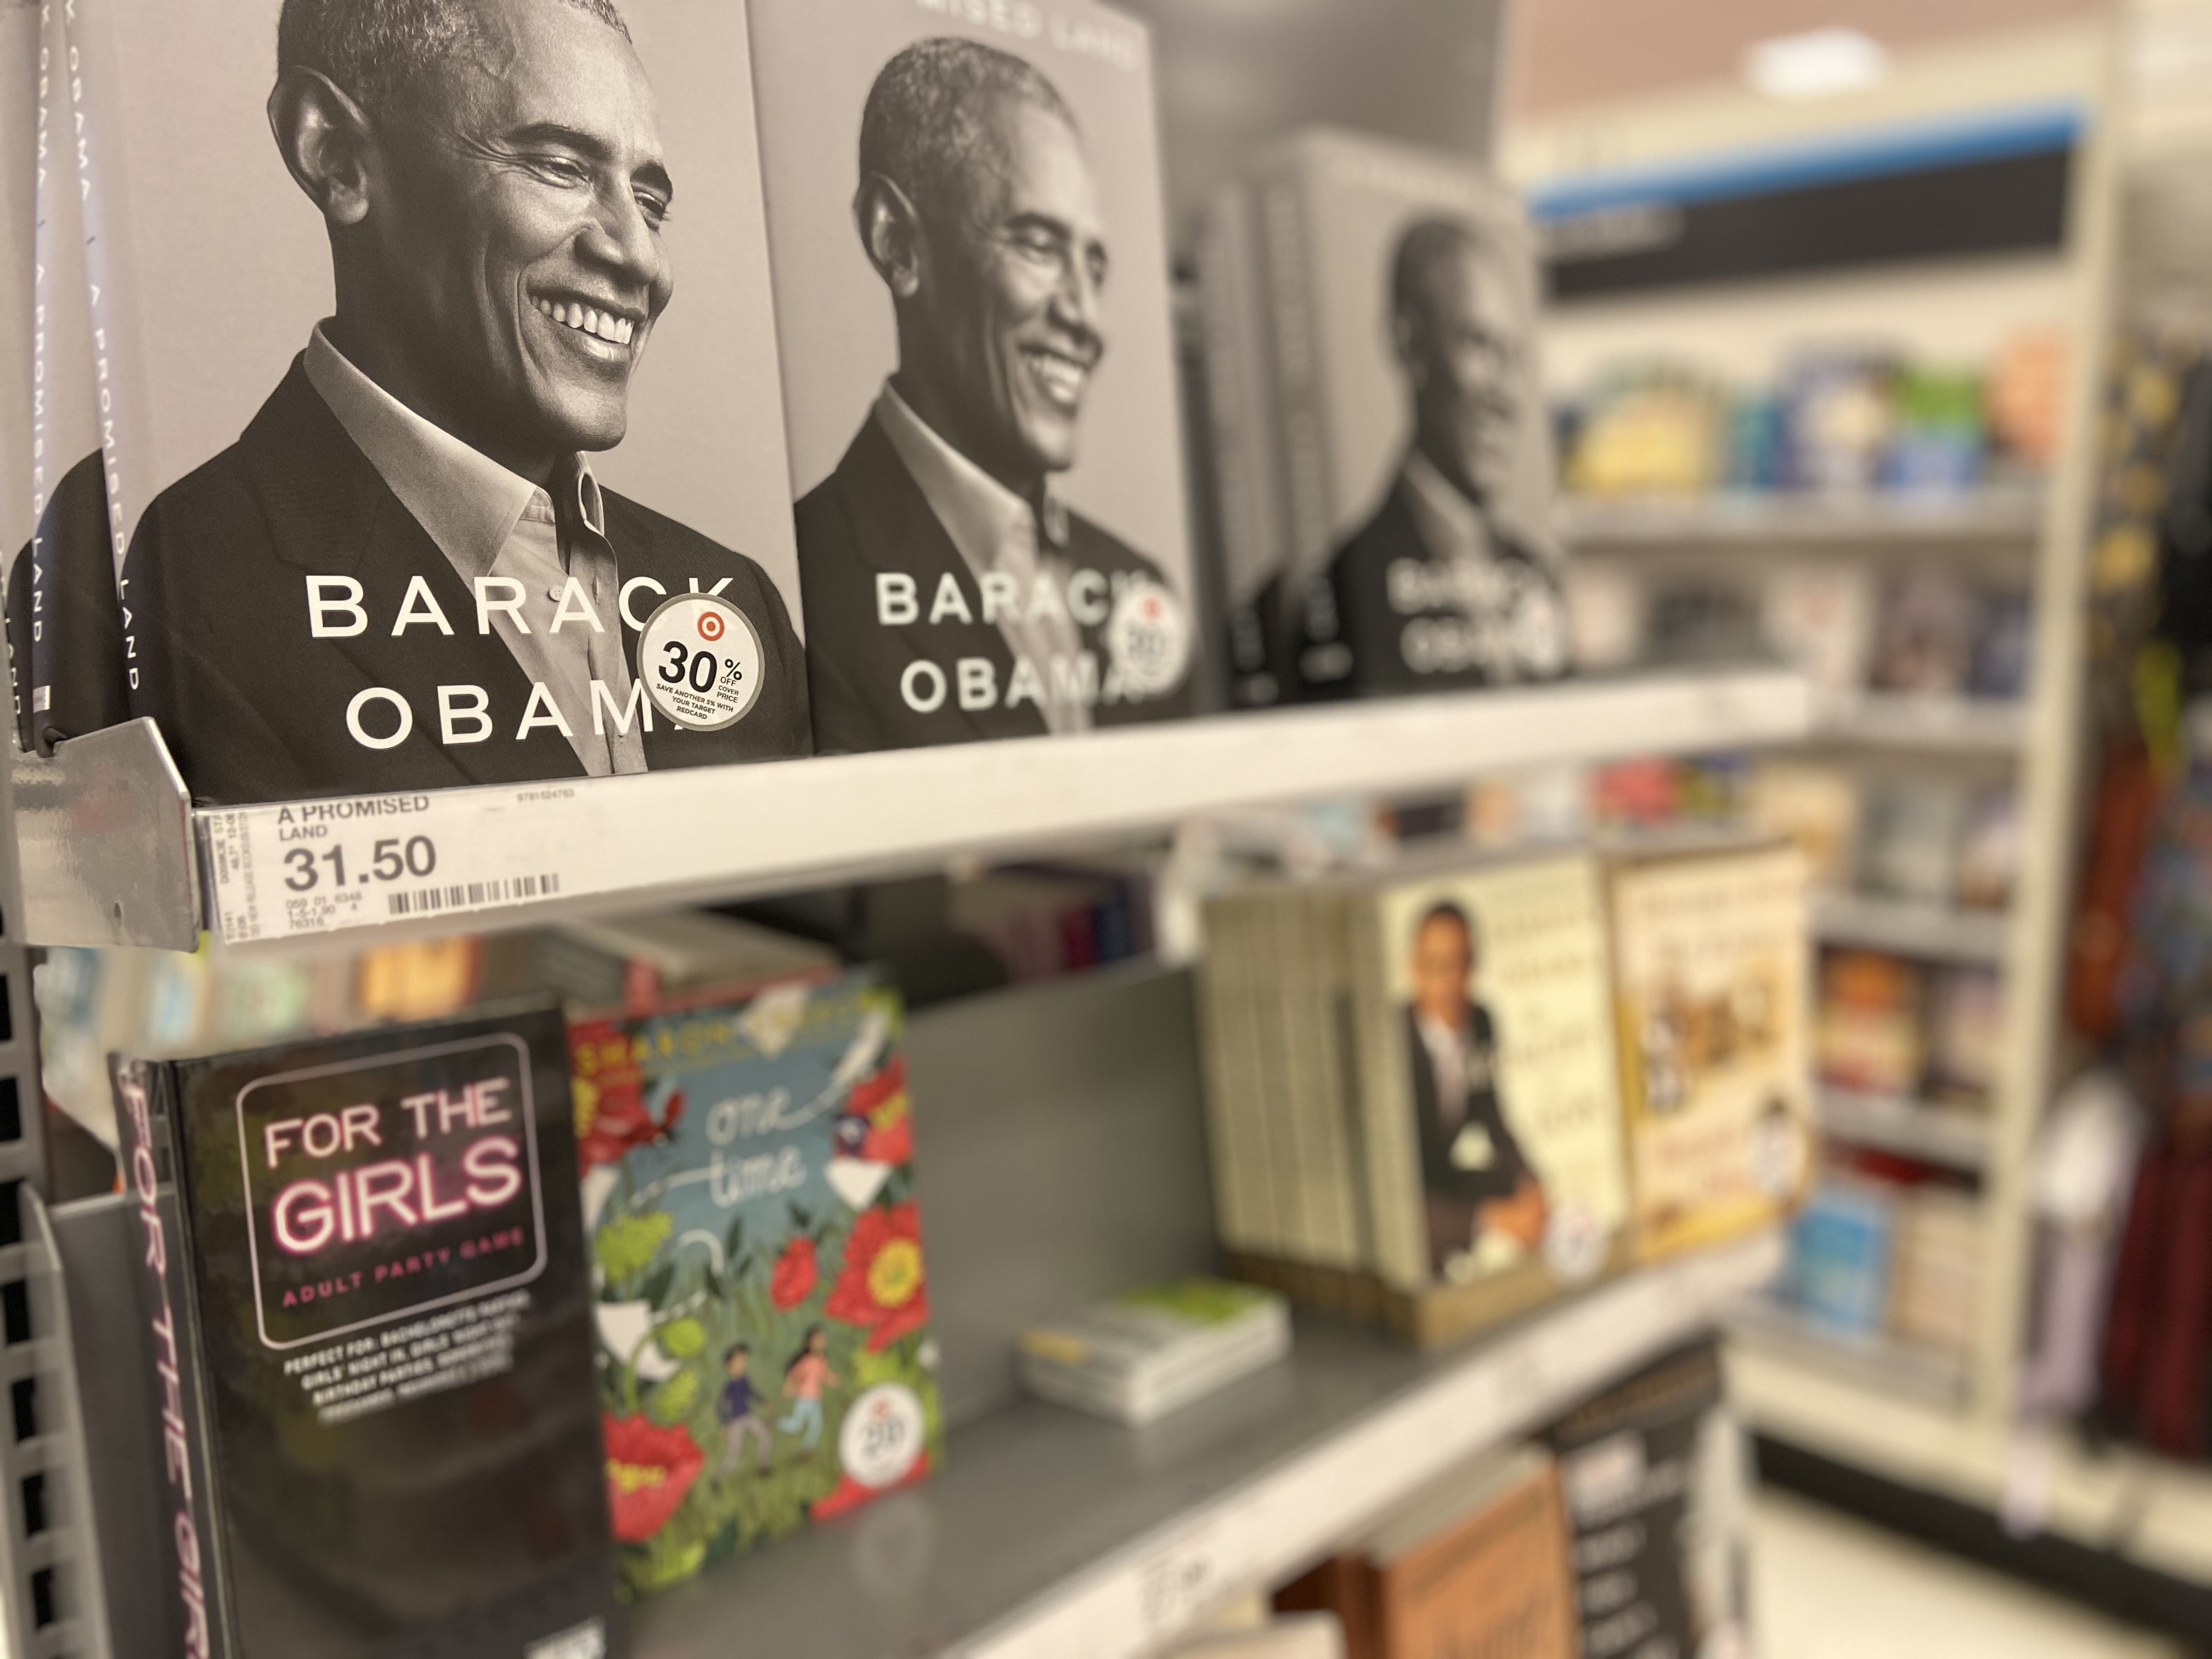 Obama's memoir is scheduled to become the best selling presidential memoir in US history (Azad Essa/MEE)